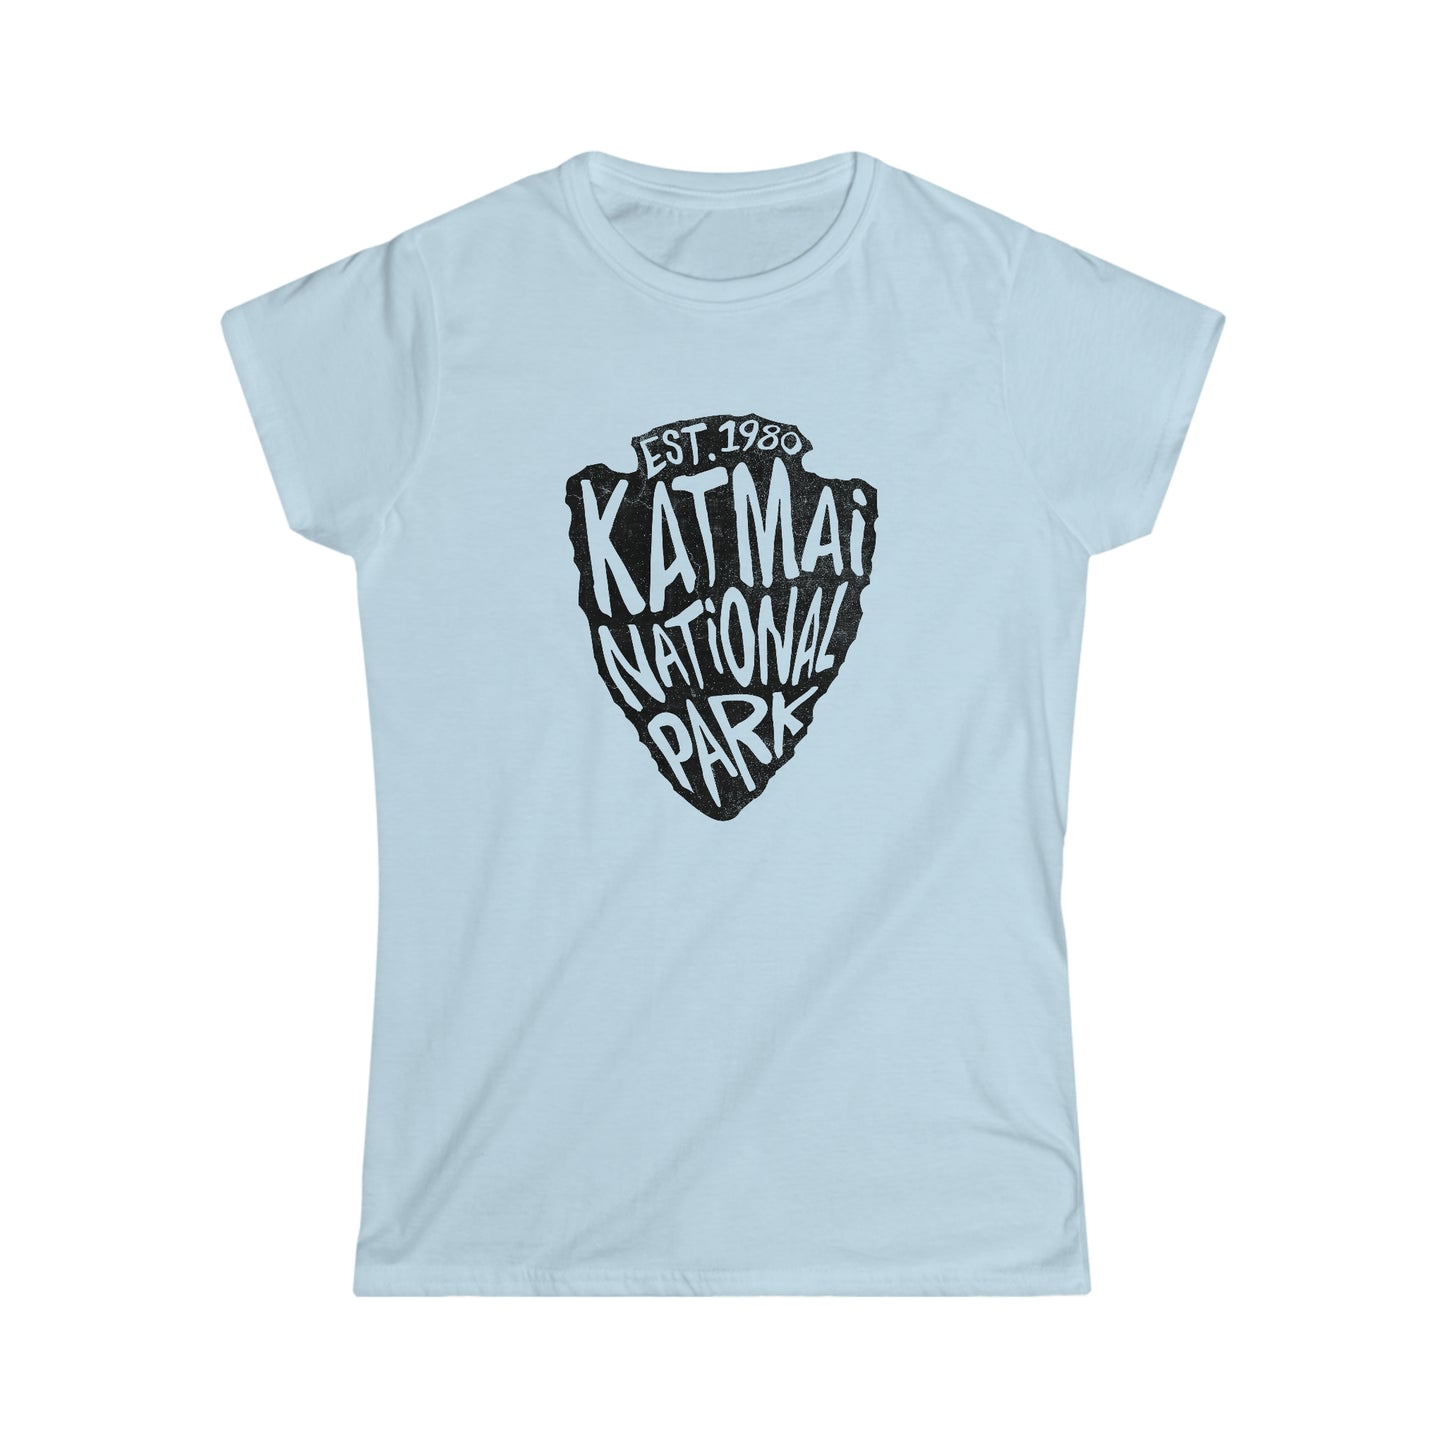 Katmai National Park Women's T-Shirt - Arrowhead Design